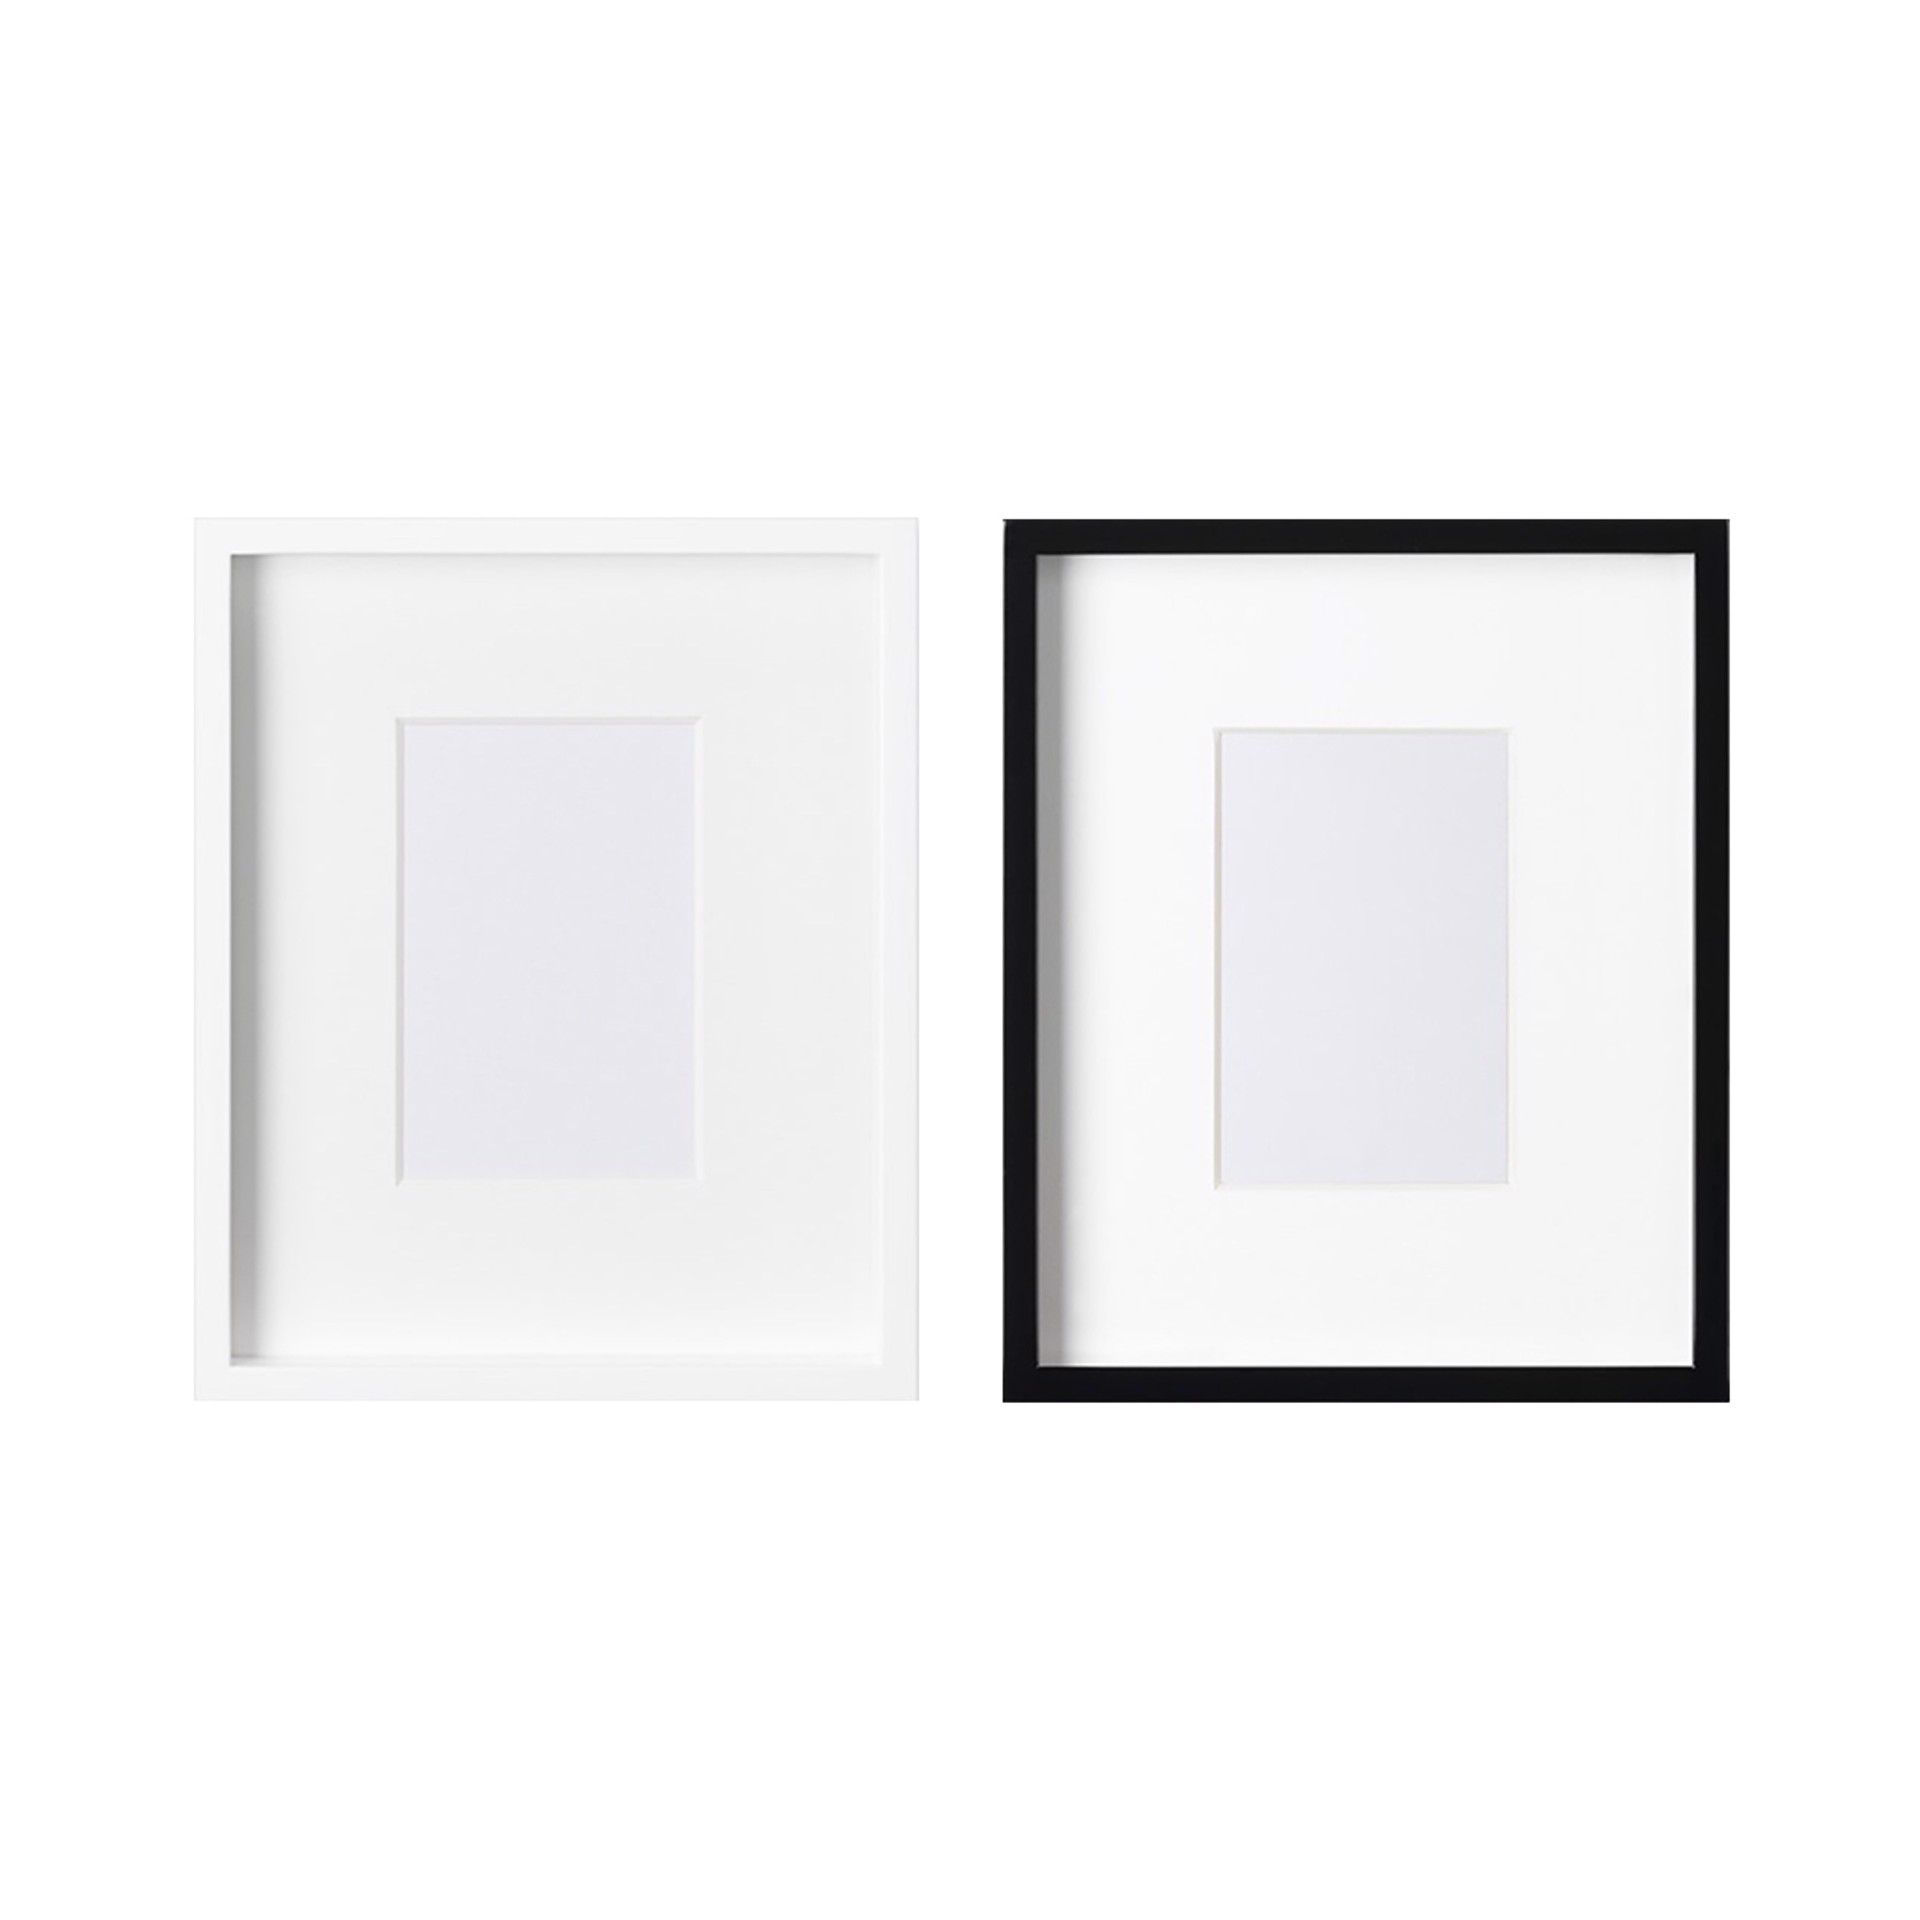 Custom framing [white shadow-box frame measuring 1" thick and 2.25" deep with UV resistance Plexiglas]